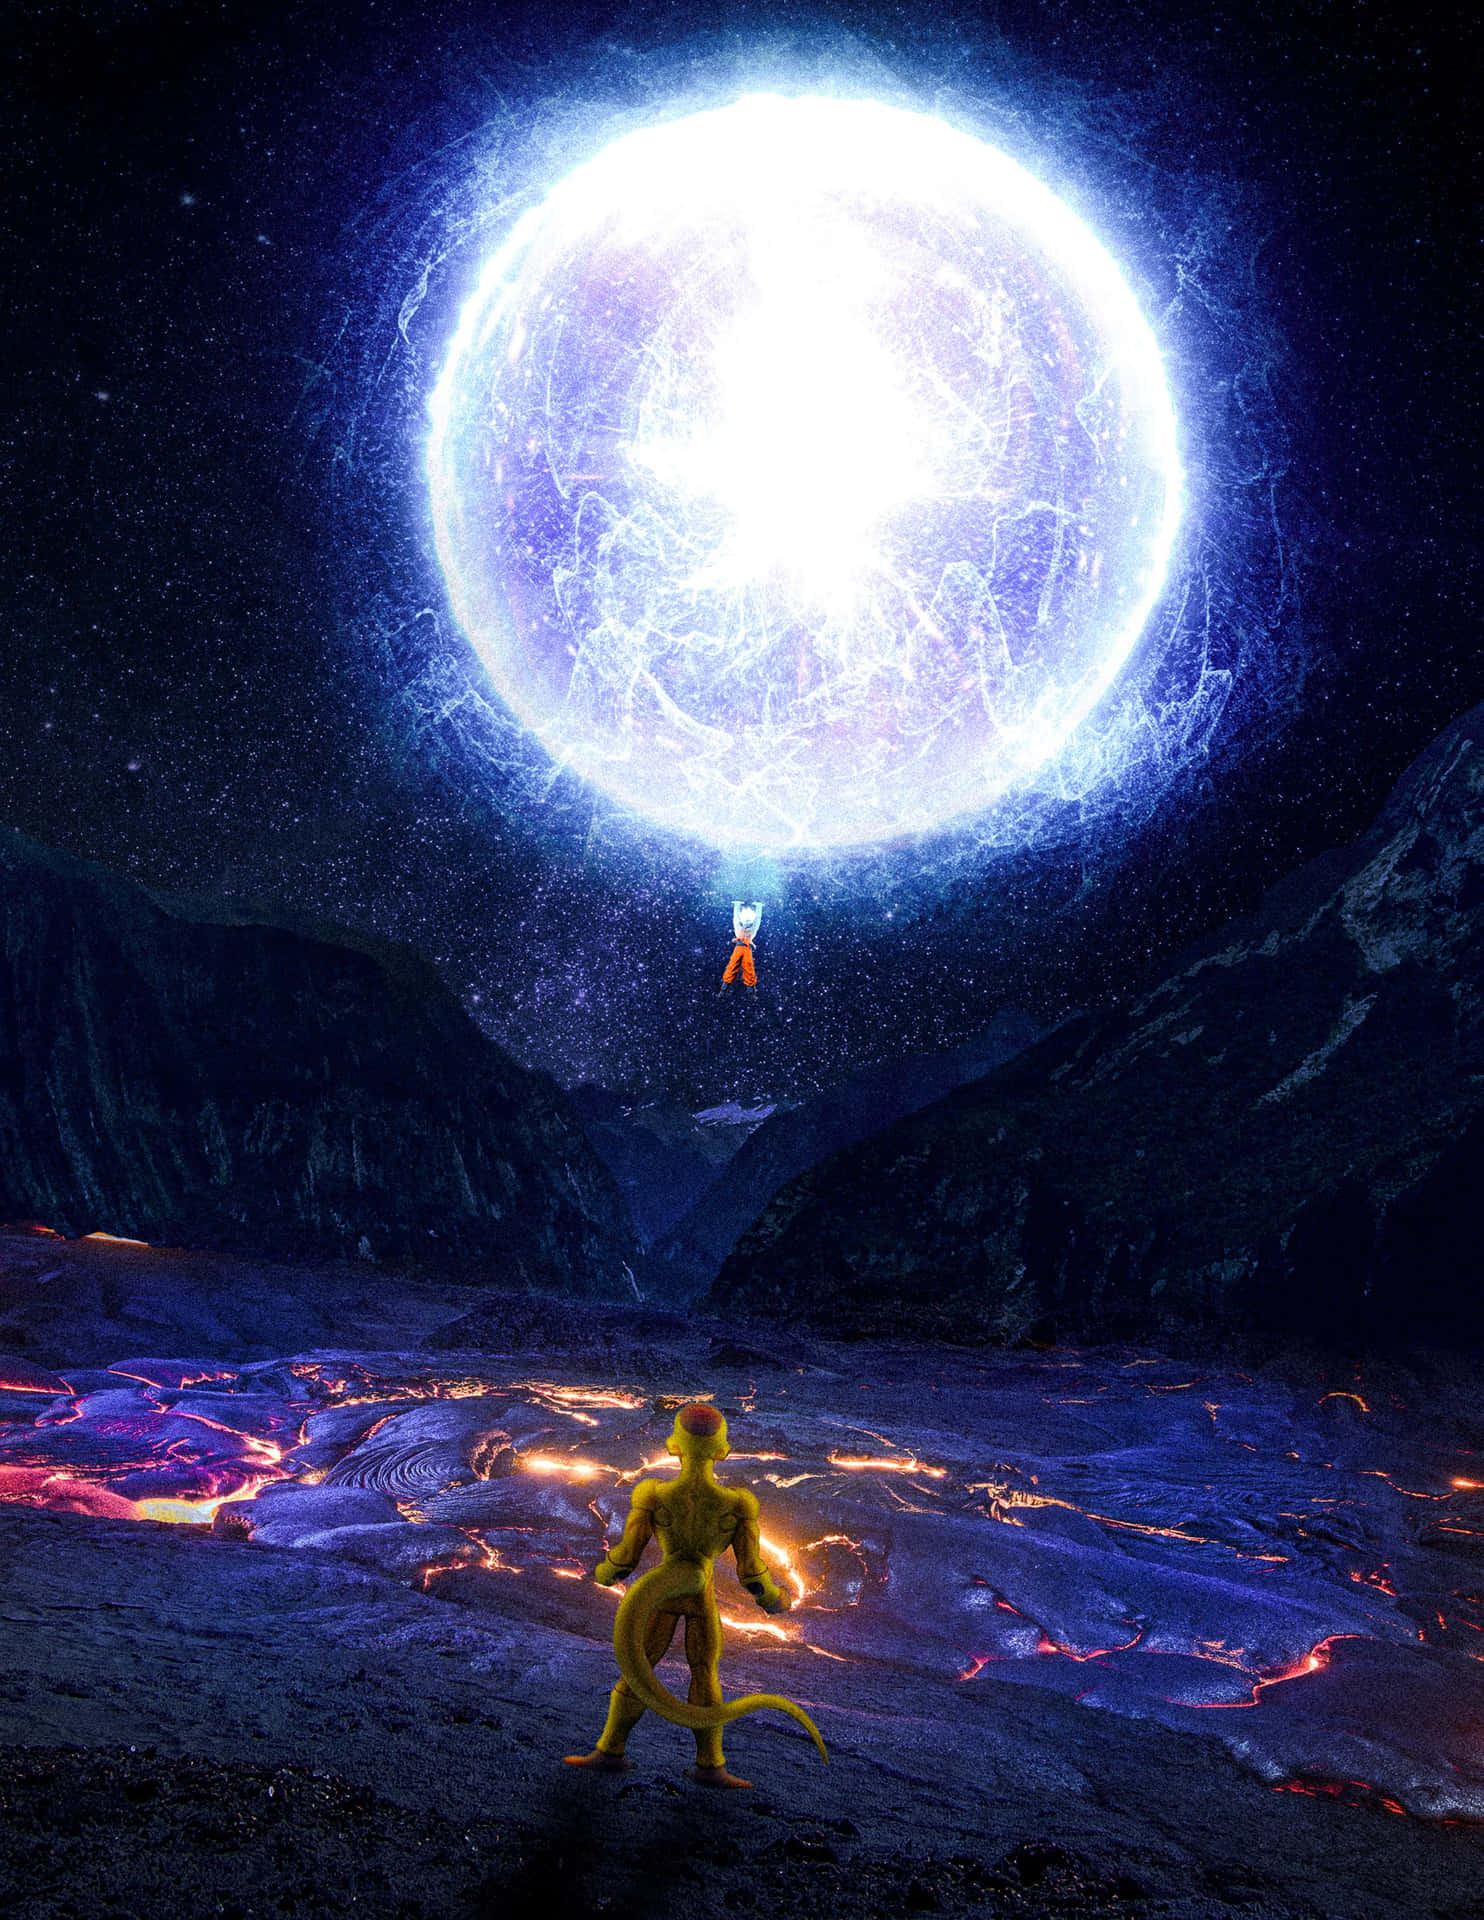 Goku unleashing a Skyward Sword Spirit Bomb in battle Wallpaper